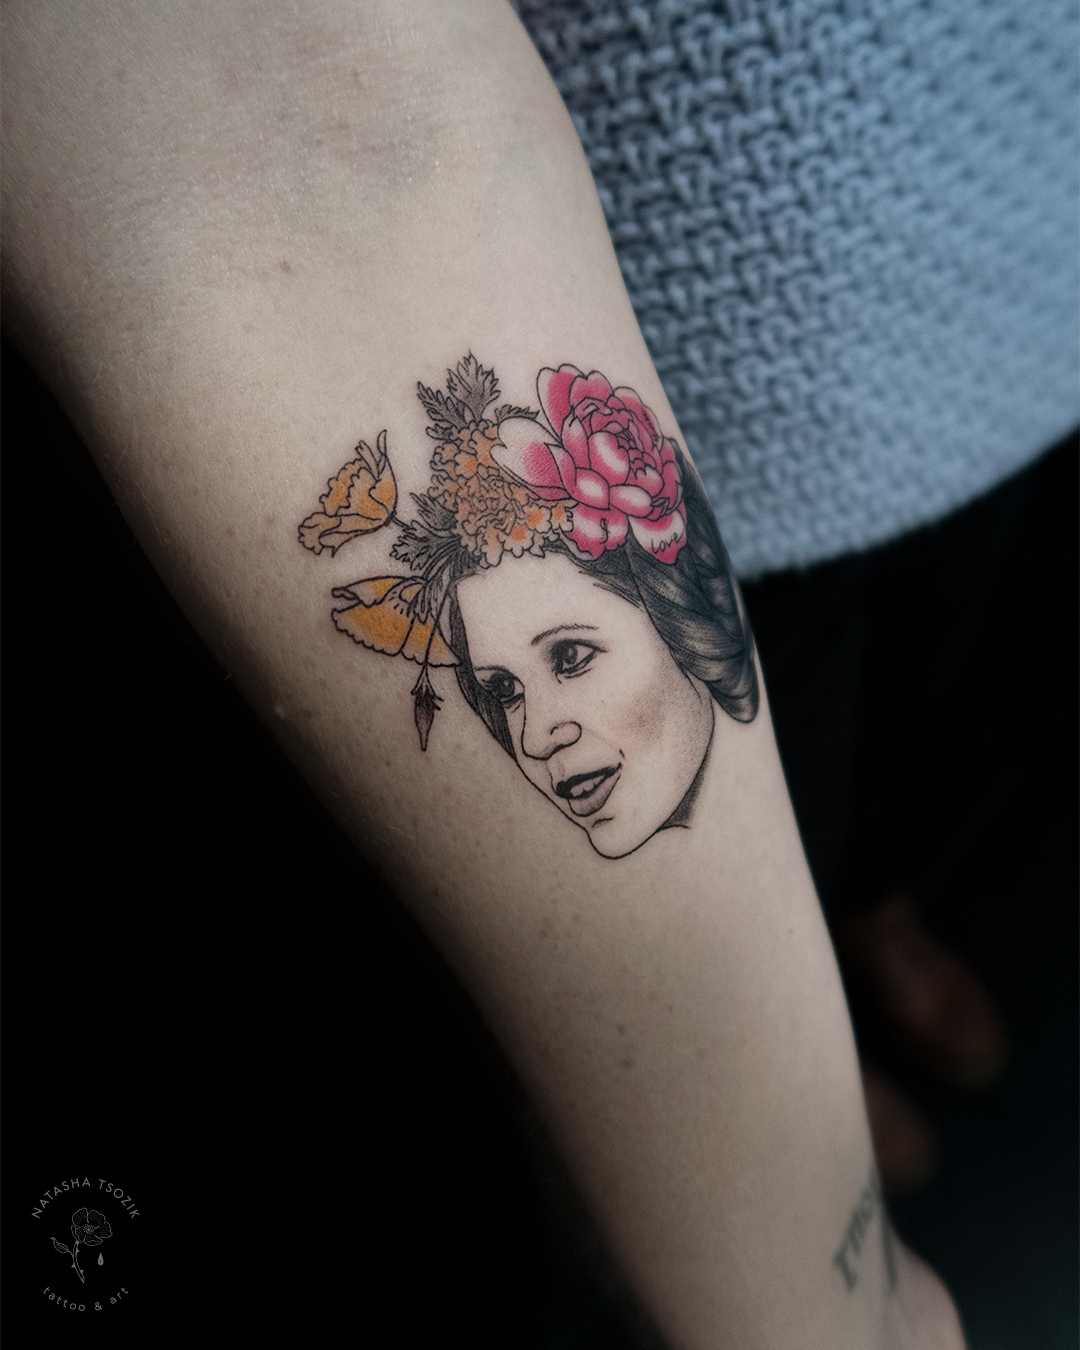 Star Wars Inspired Tattoos. Fine line tattoo on a forearm – a portrait of Princess Leia with flowers by Natasha Tsozik